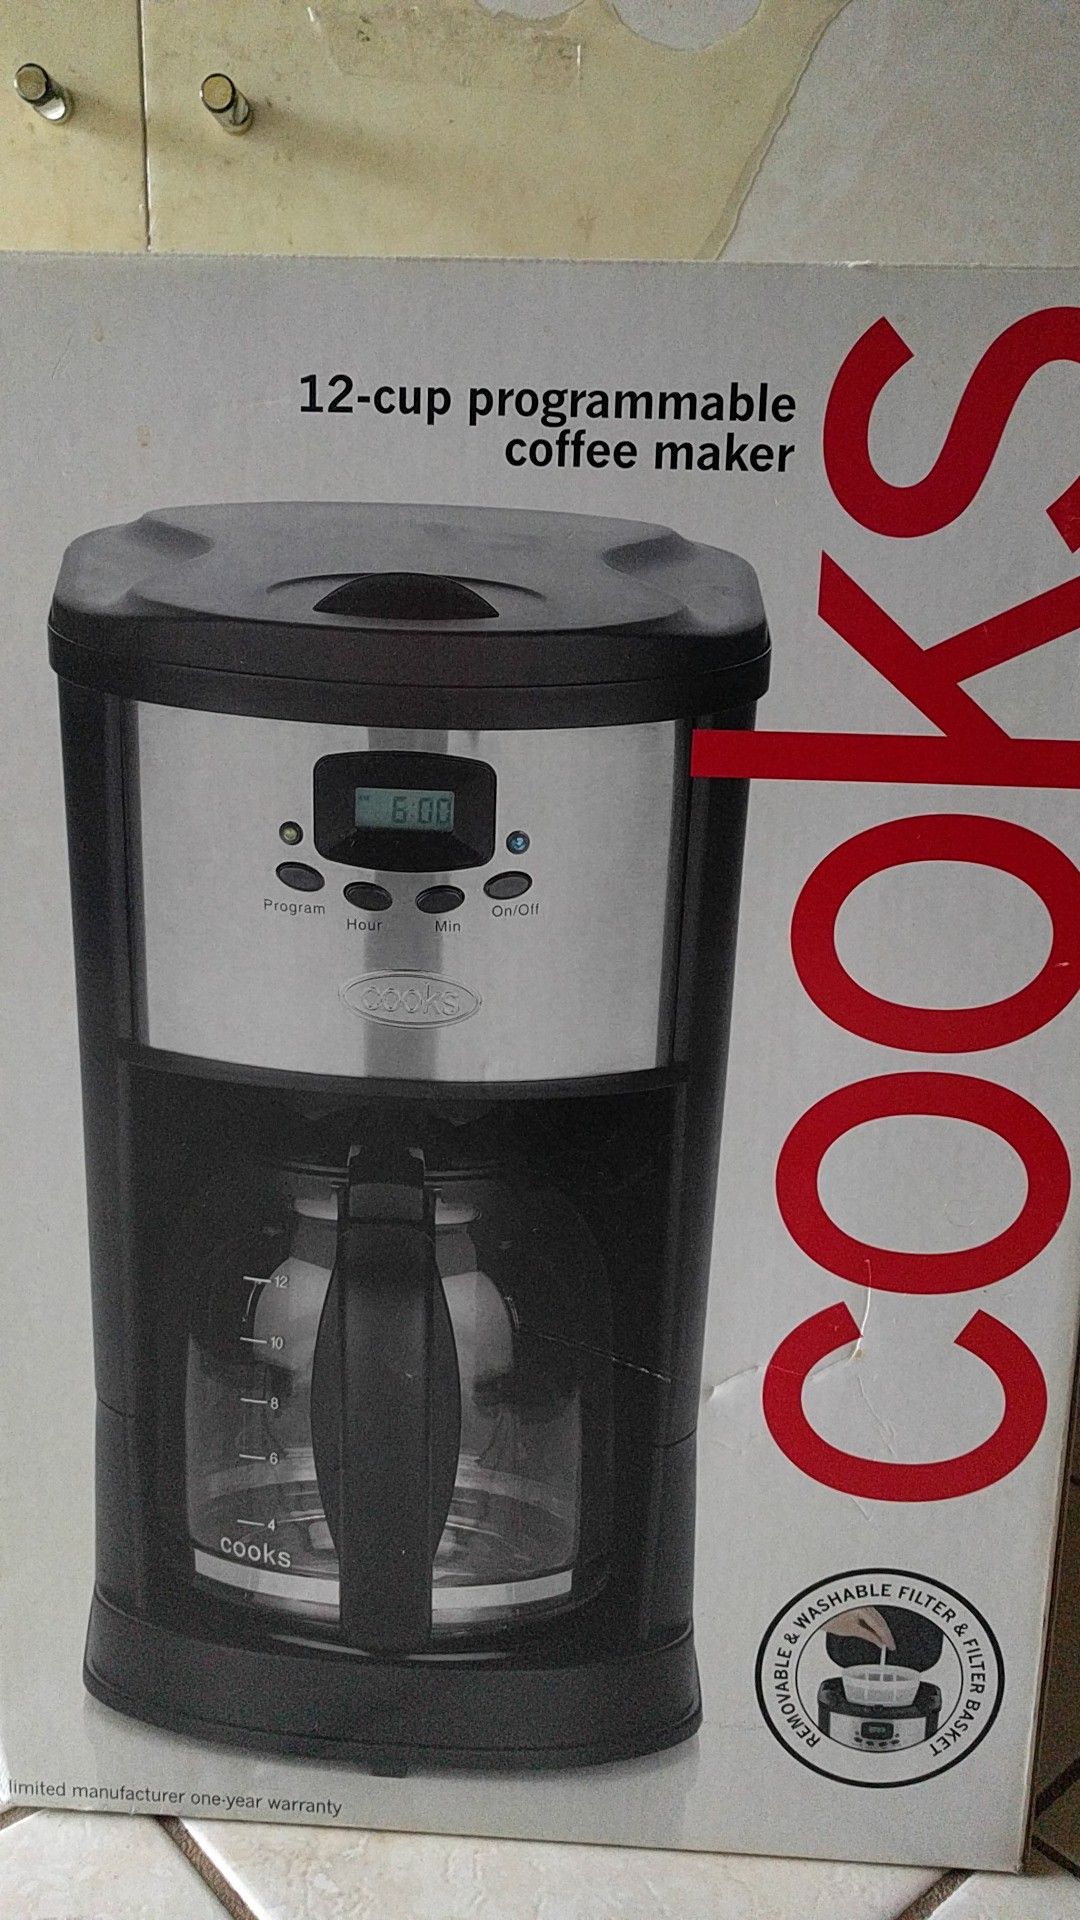 Cooks Coffee Maker